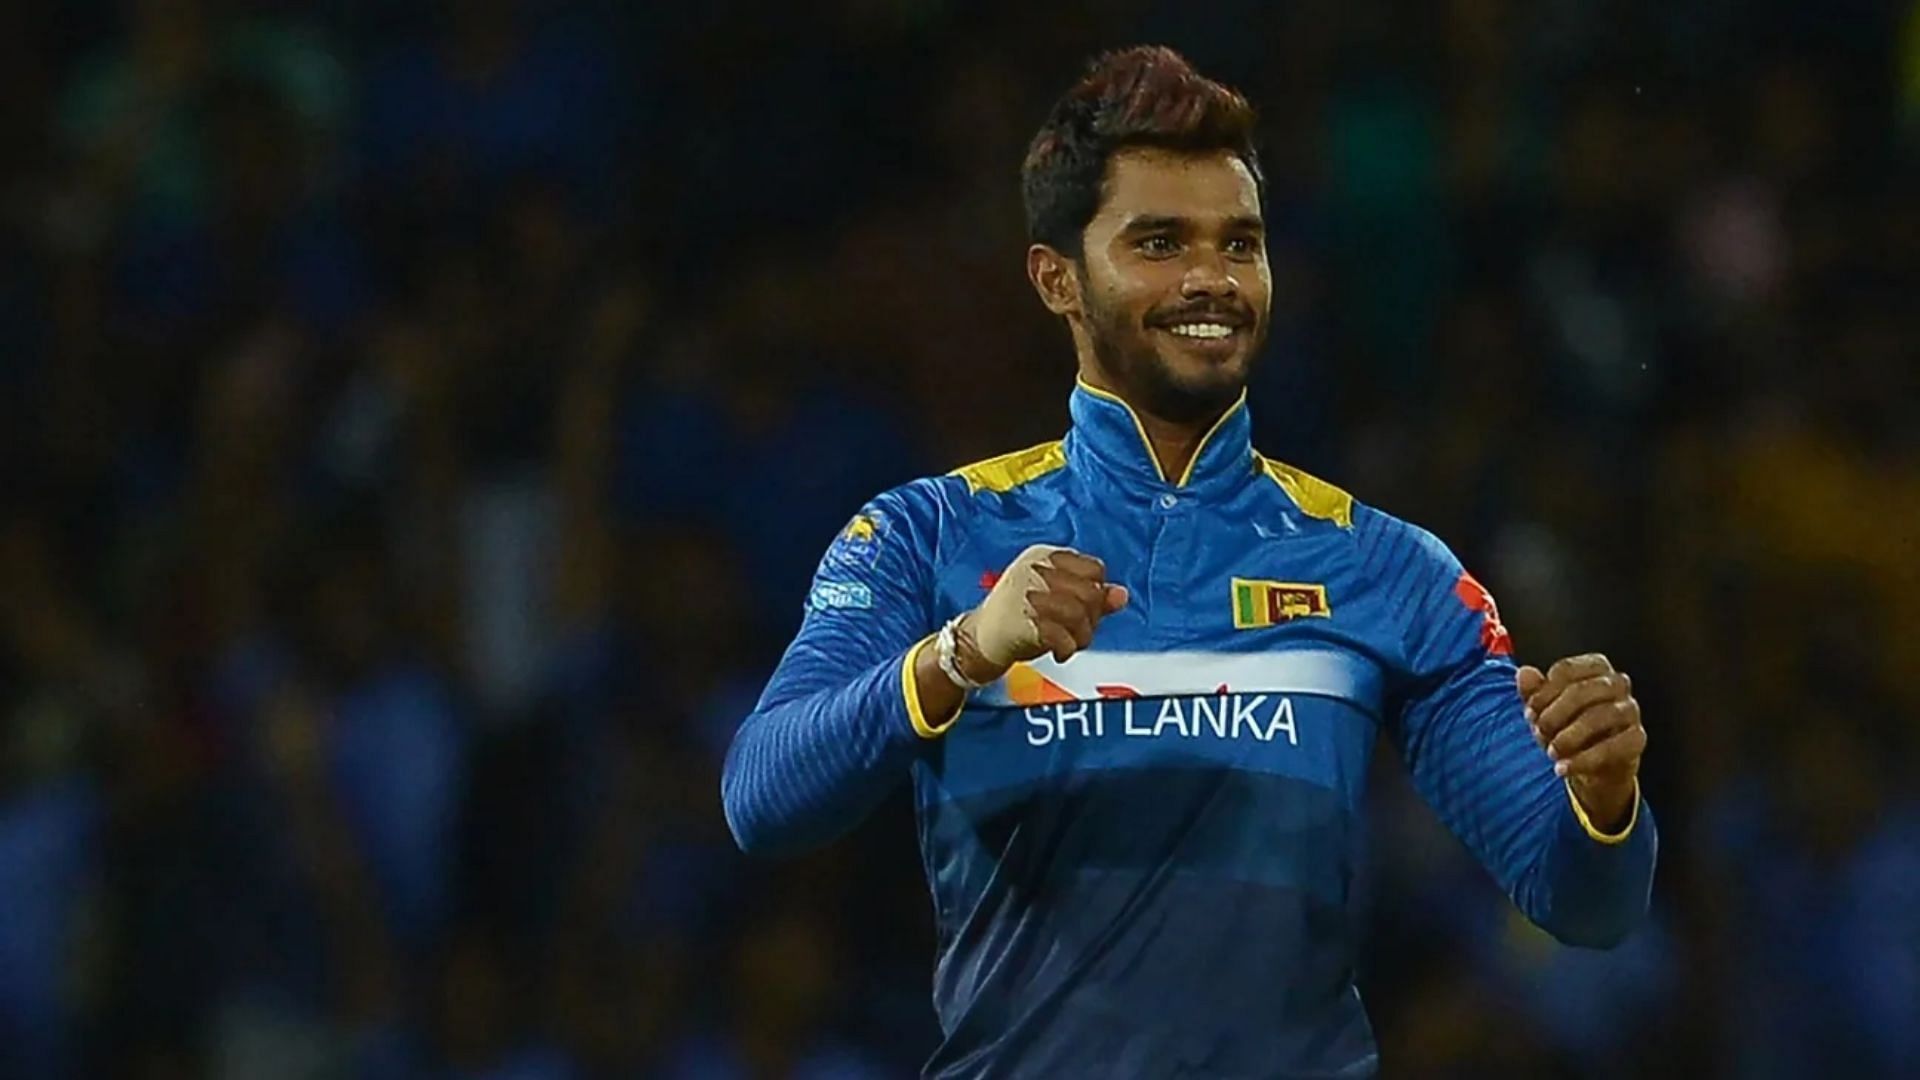 Dhananjaya de Silva&#039;s all-round performance helped Sri Lanka trounce South Africa. (Image Courtesy: espncricinfo.com)